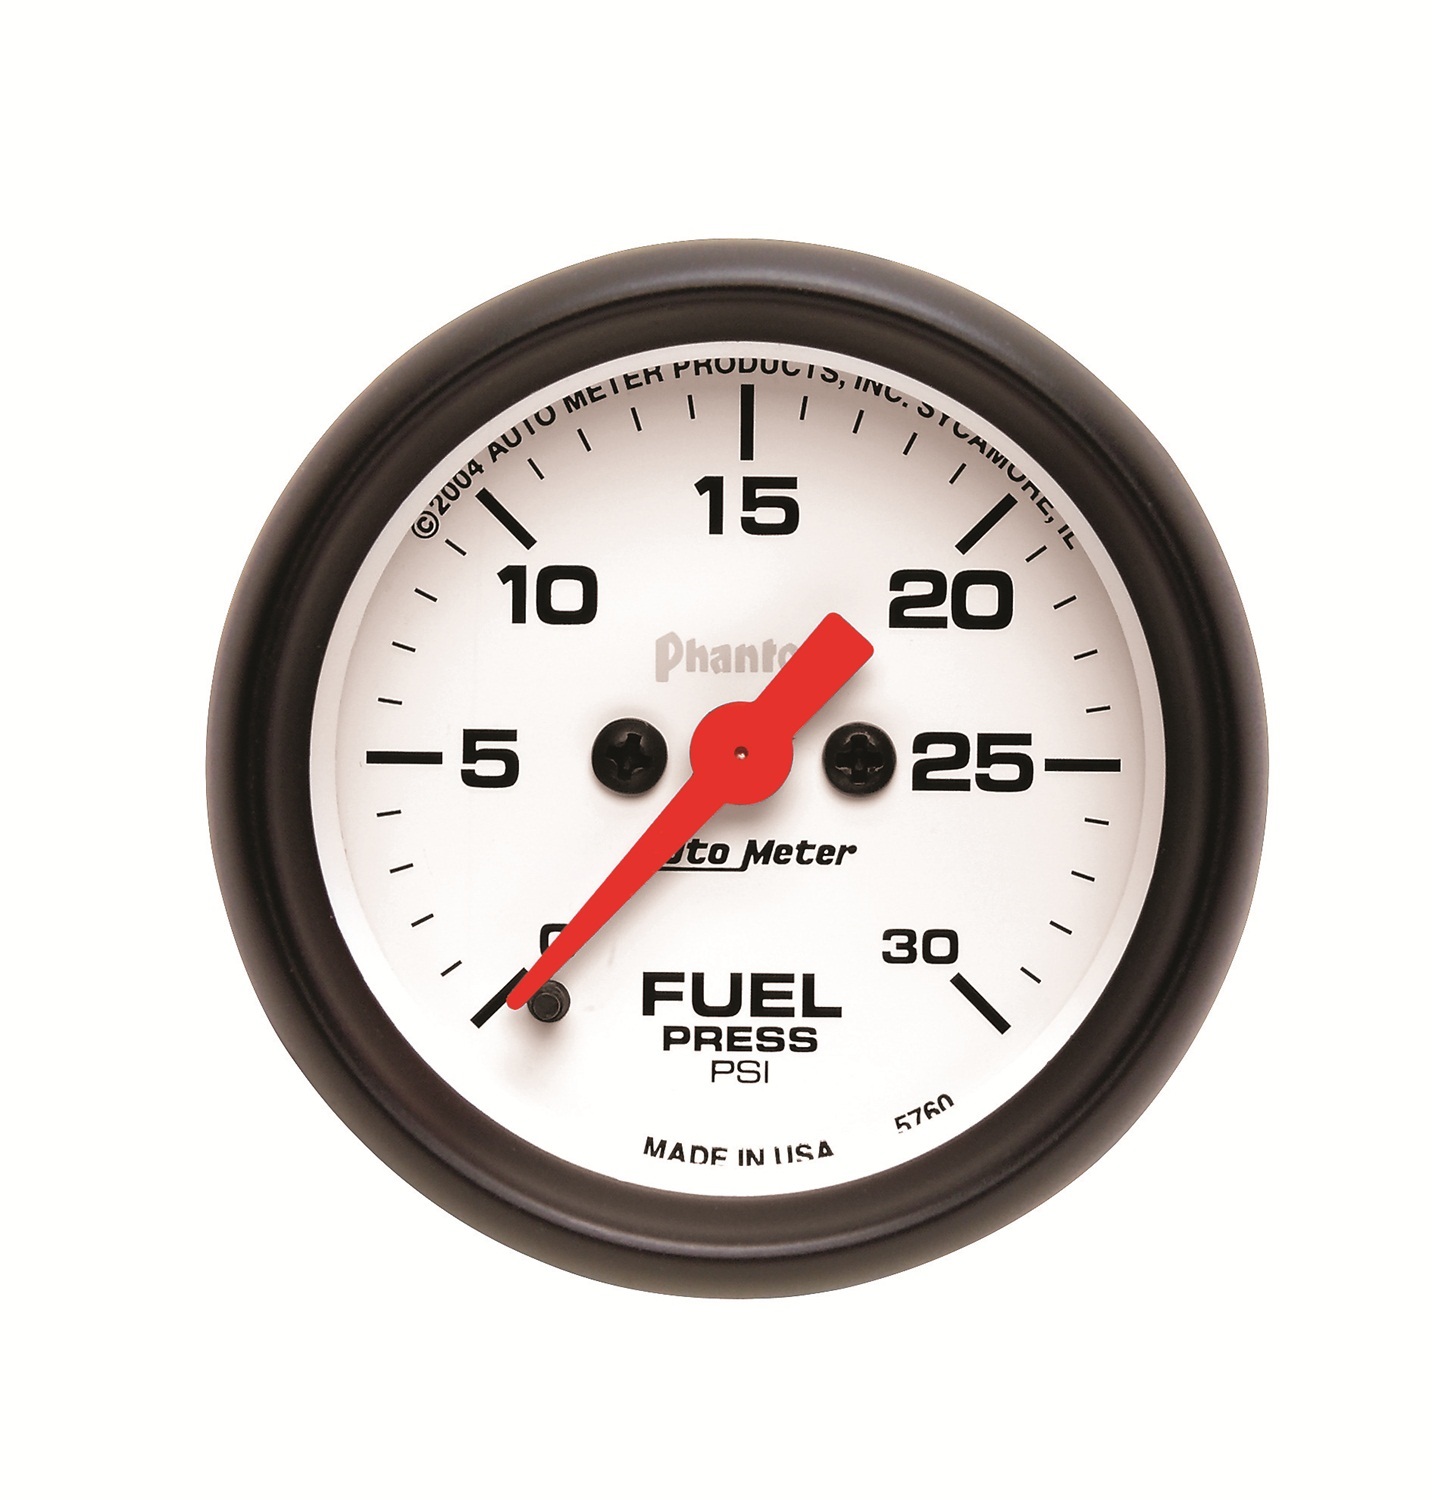 Auto Meter Auto Meter 5760 Phantom; Electric Fuel Pressure Gauge